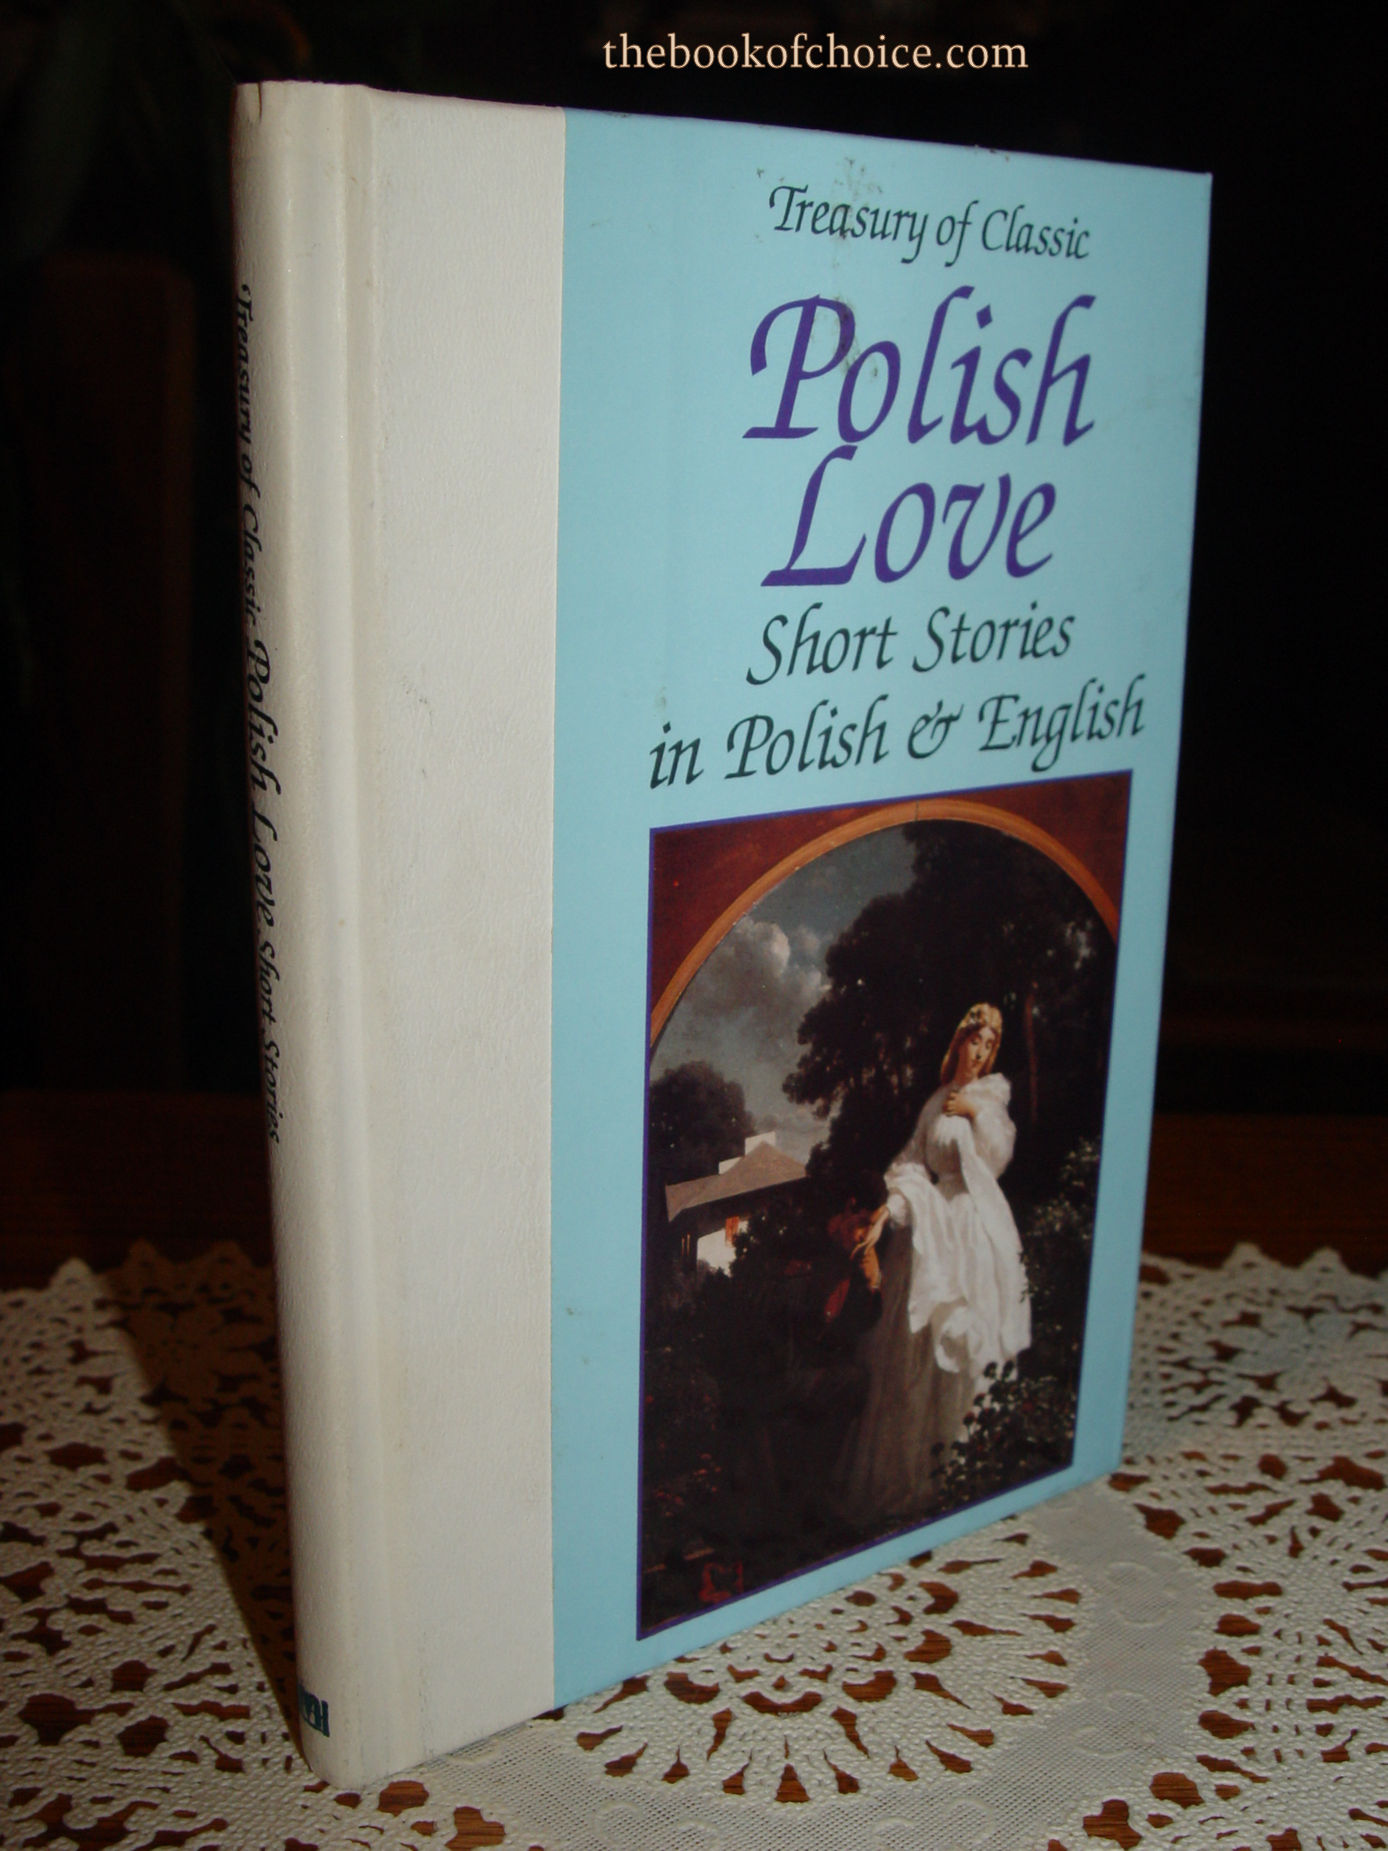 Treasury of
                        Classic Polish Love Short Stories in Polish and
                        English 1997